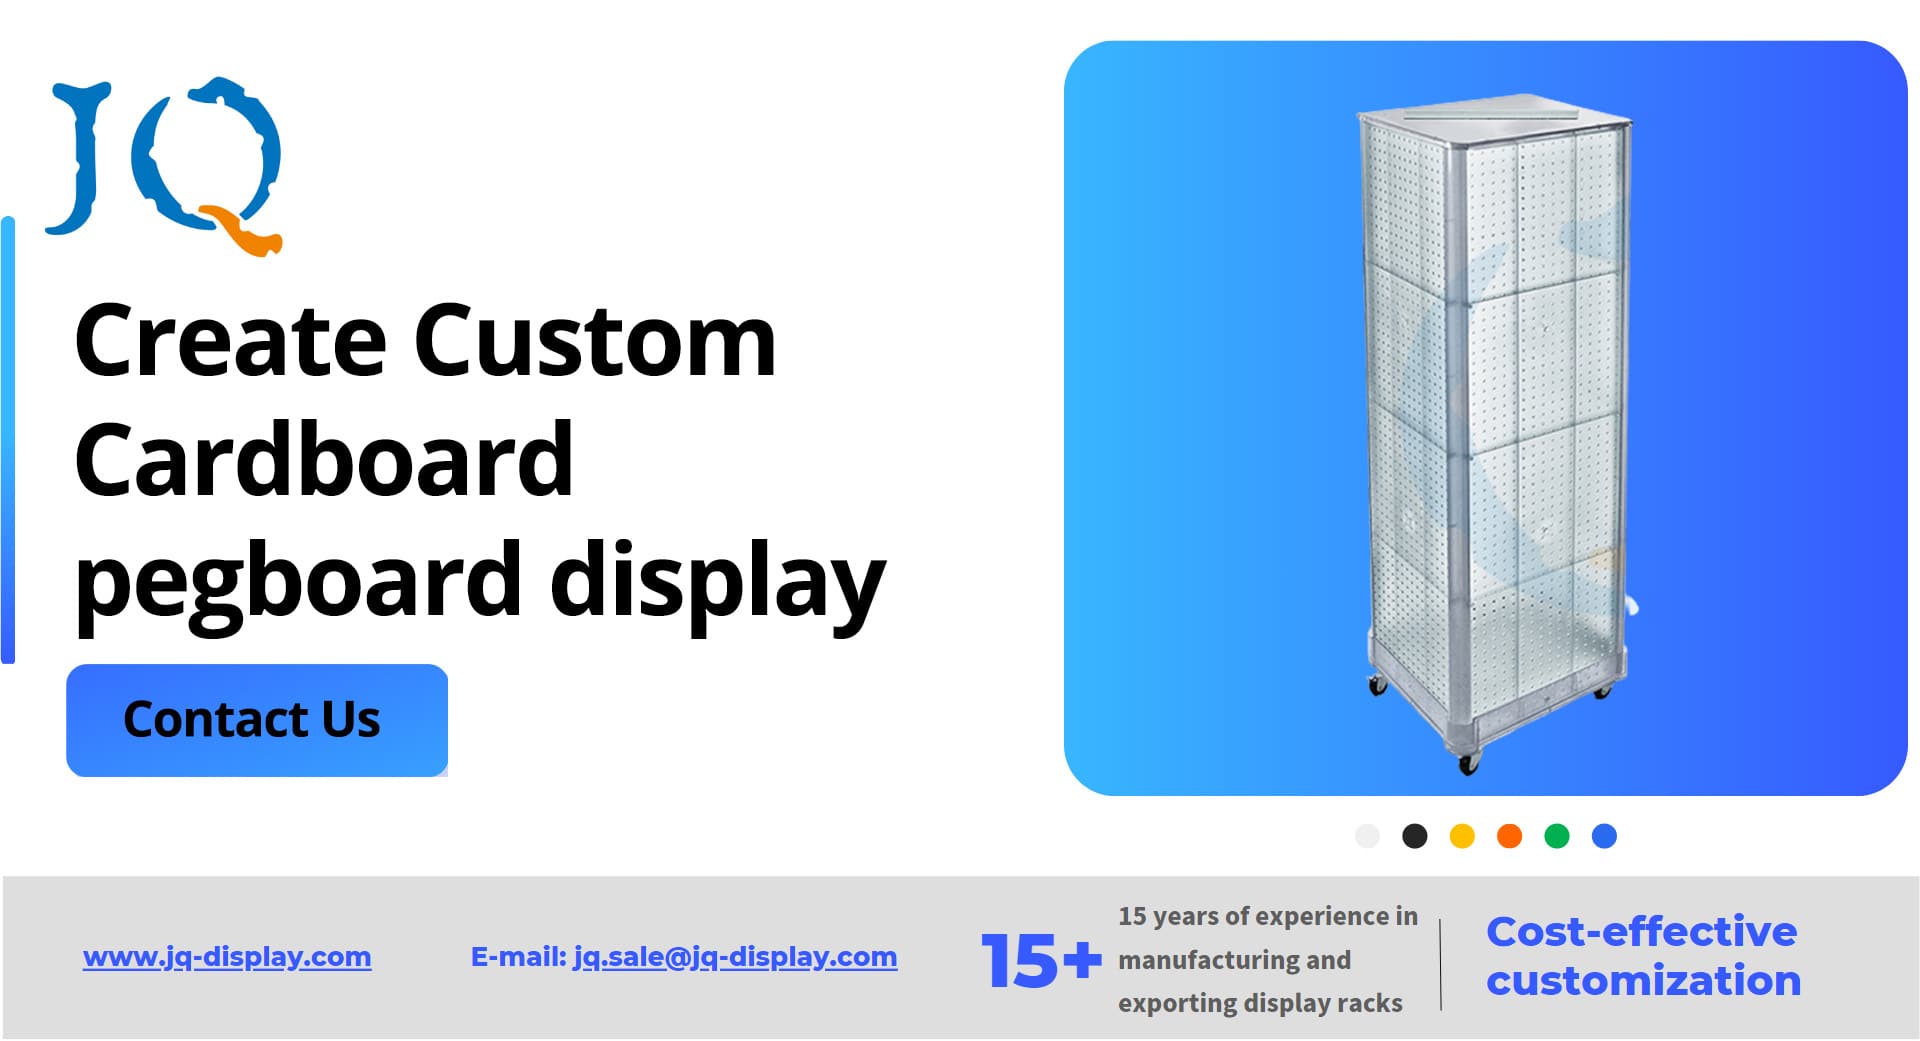 Create Custom
Cardboard 
pegboard display